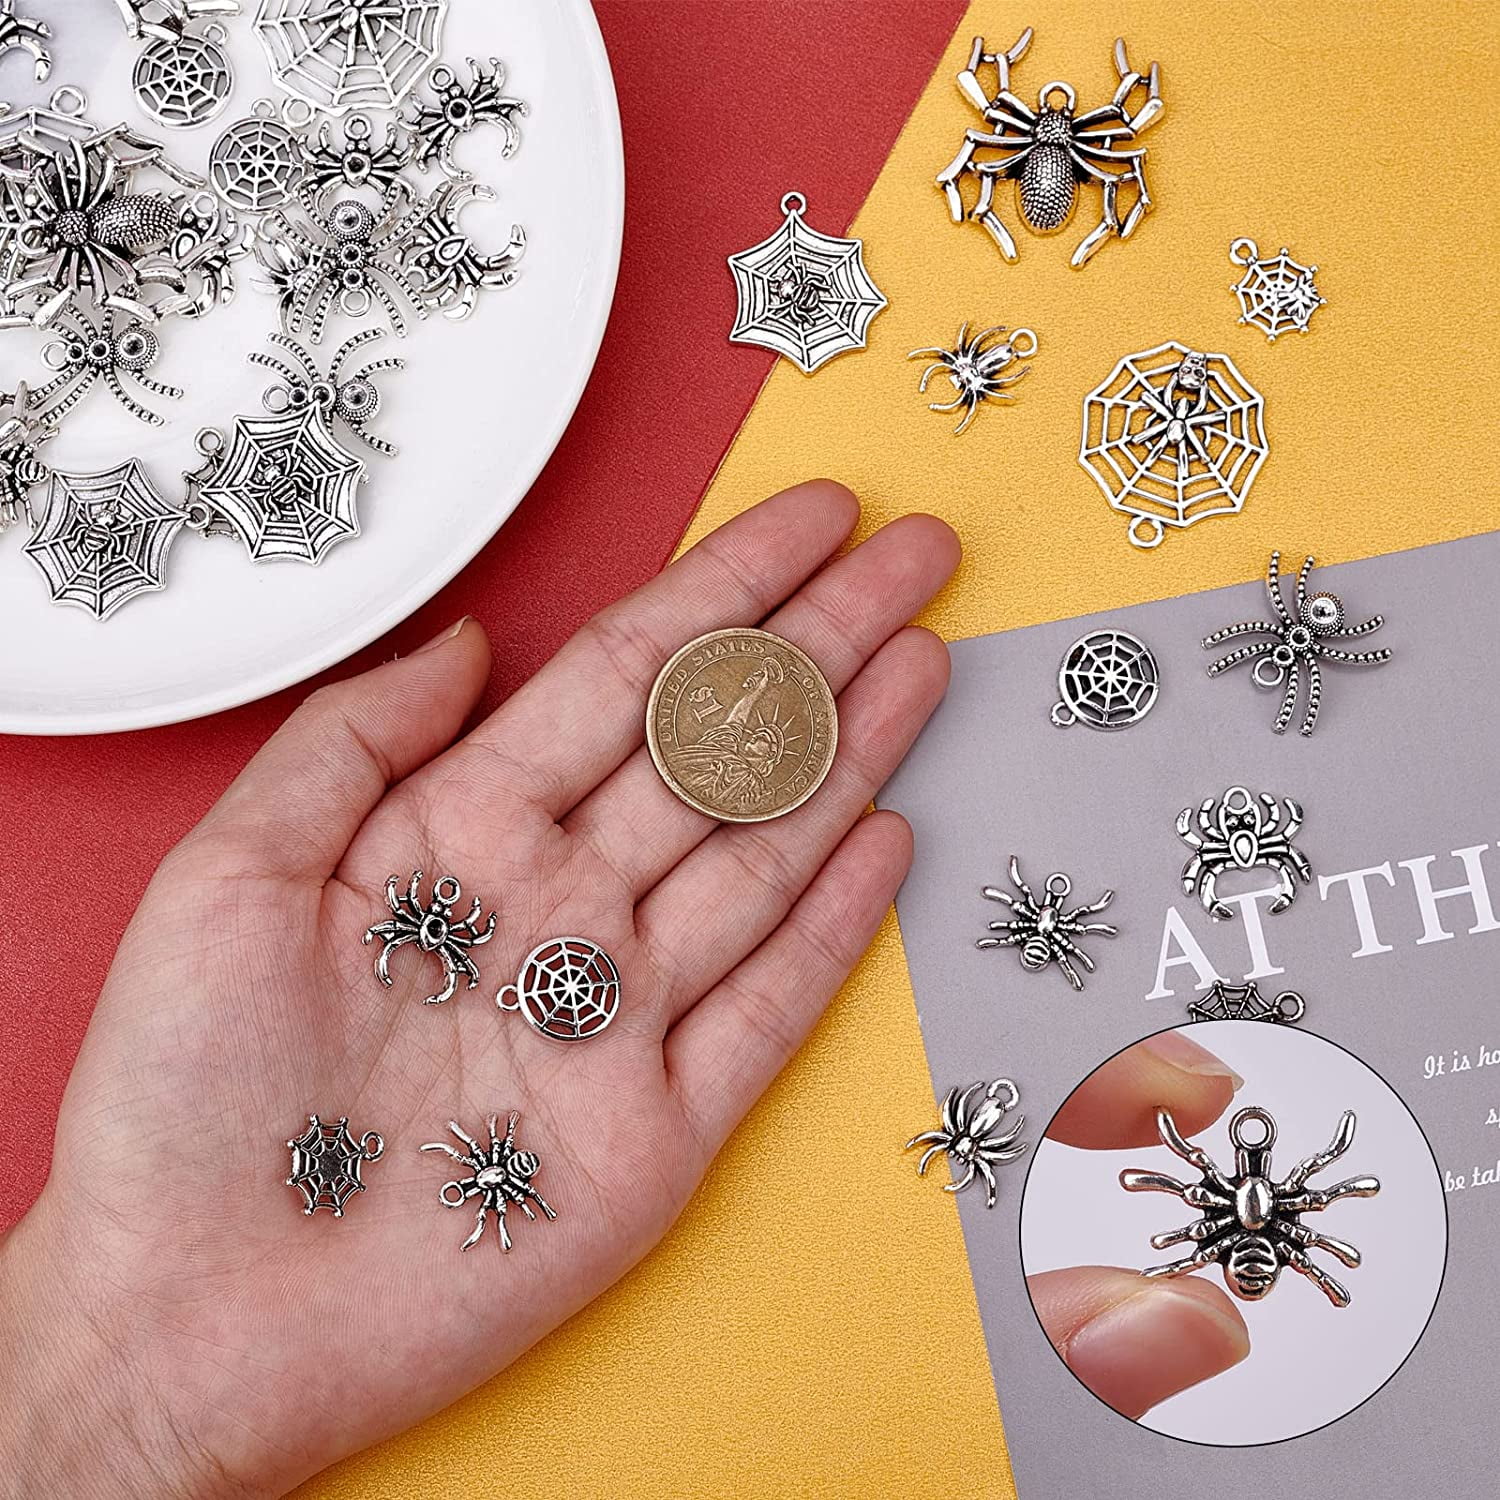 14pcs Antique Silver Christmas Hexagonal Snowflake Pendants Alloy Christmas Snowflake Charms for DIY Bracelet Pendant Beaded Jewelry Accessories